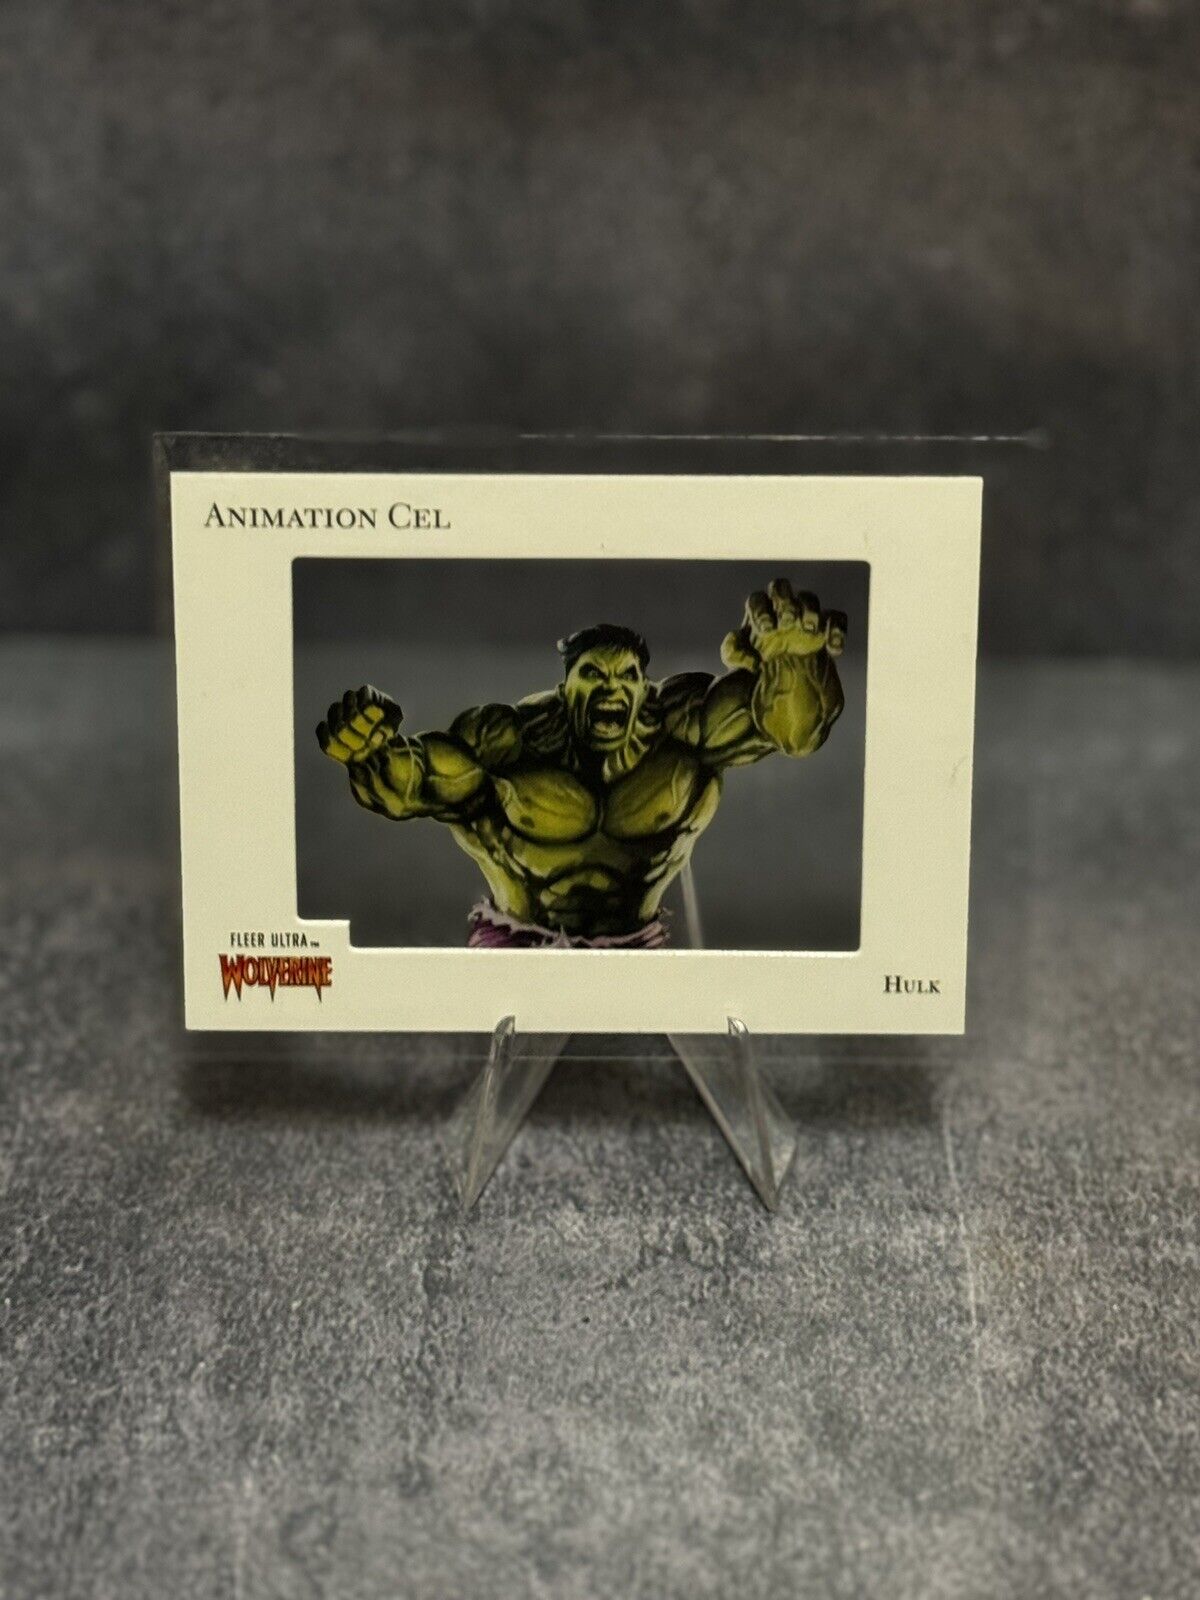 2023 UPPER DECK FLEER ULTRA WOLVERINE Hulk ANIMATION CELL CARD